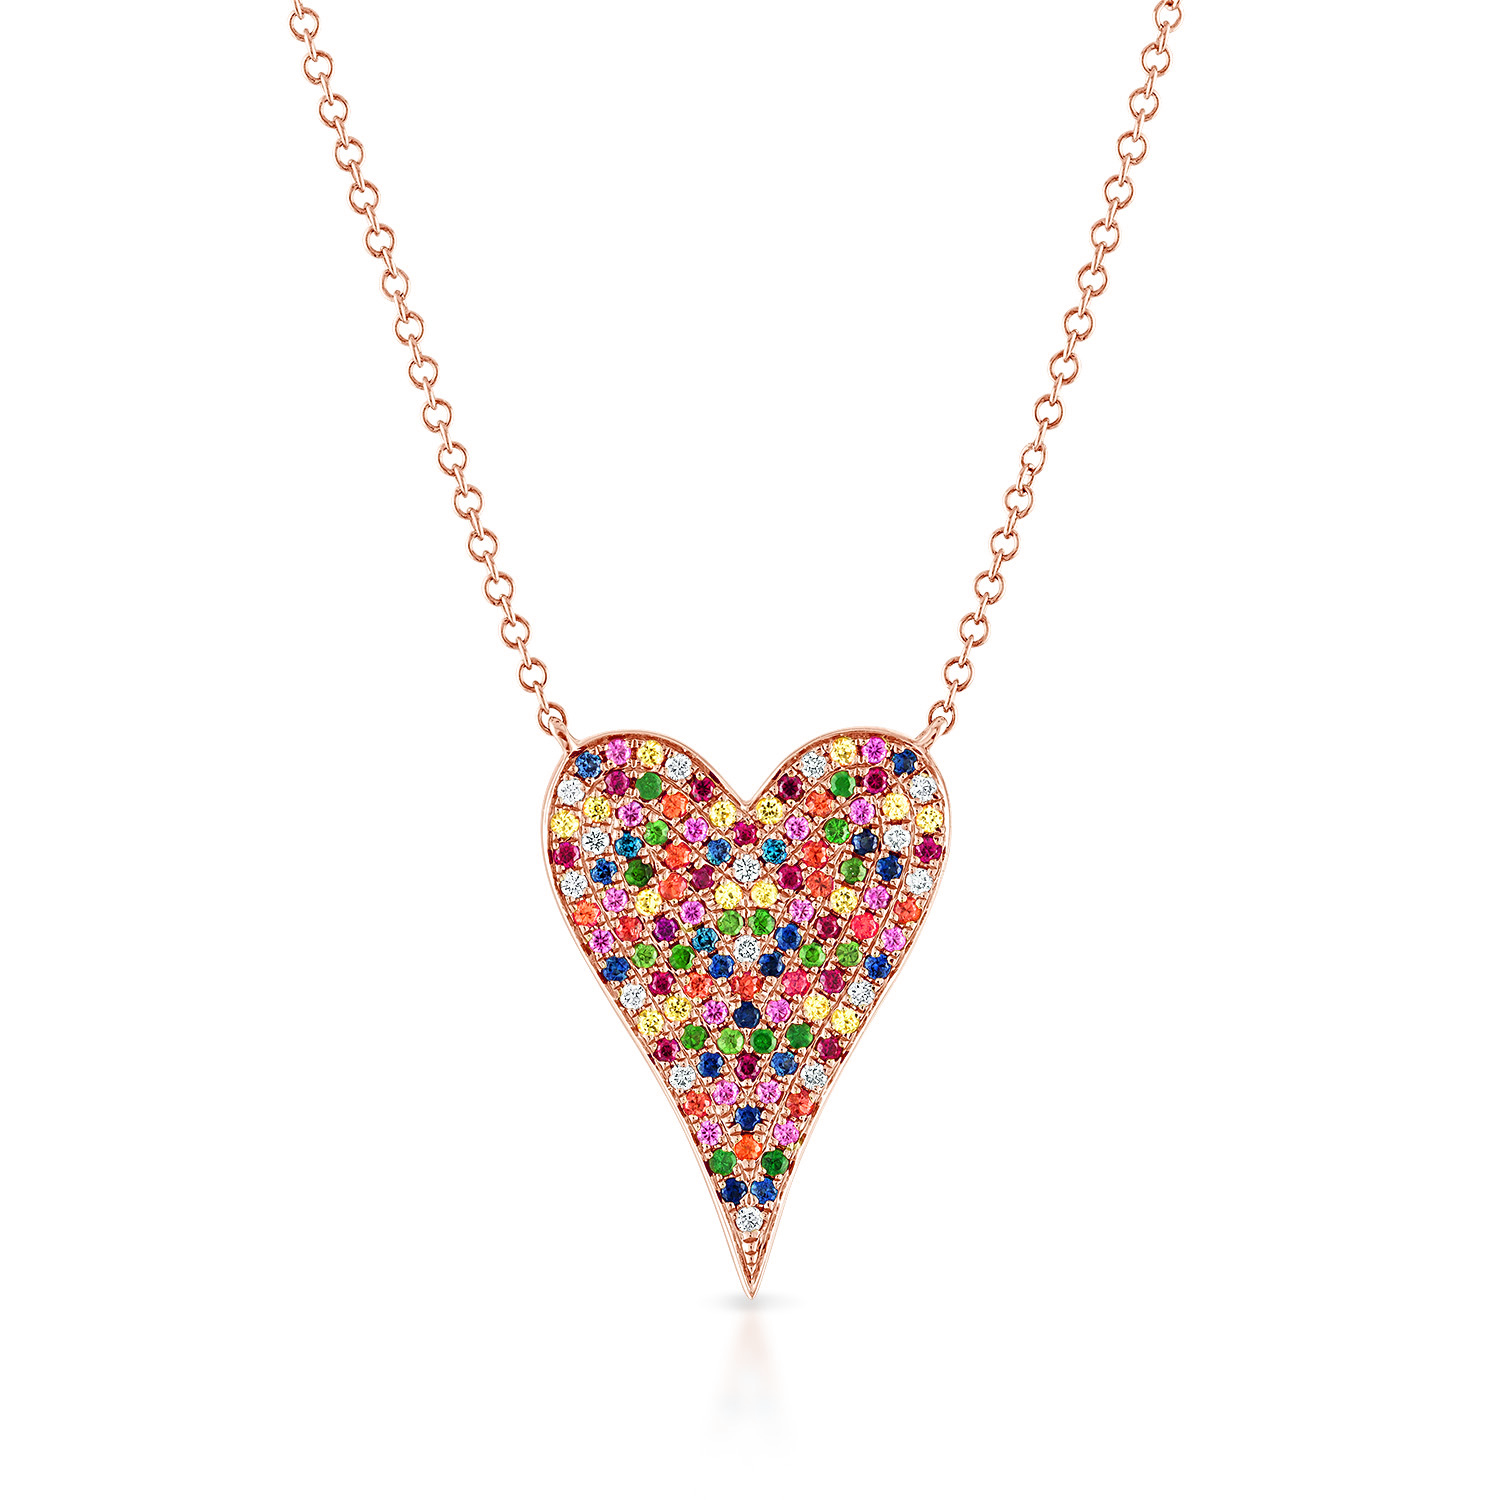 Rainbow & Heart Necklace